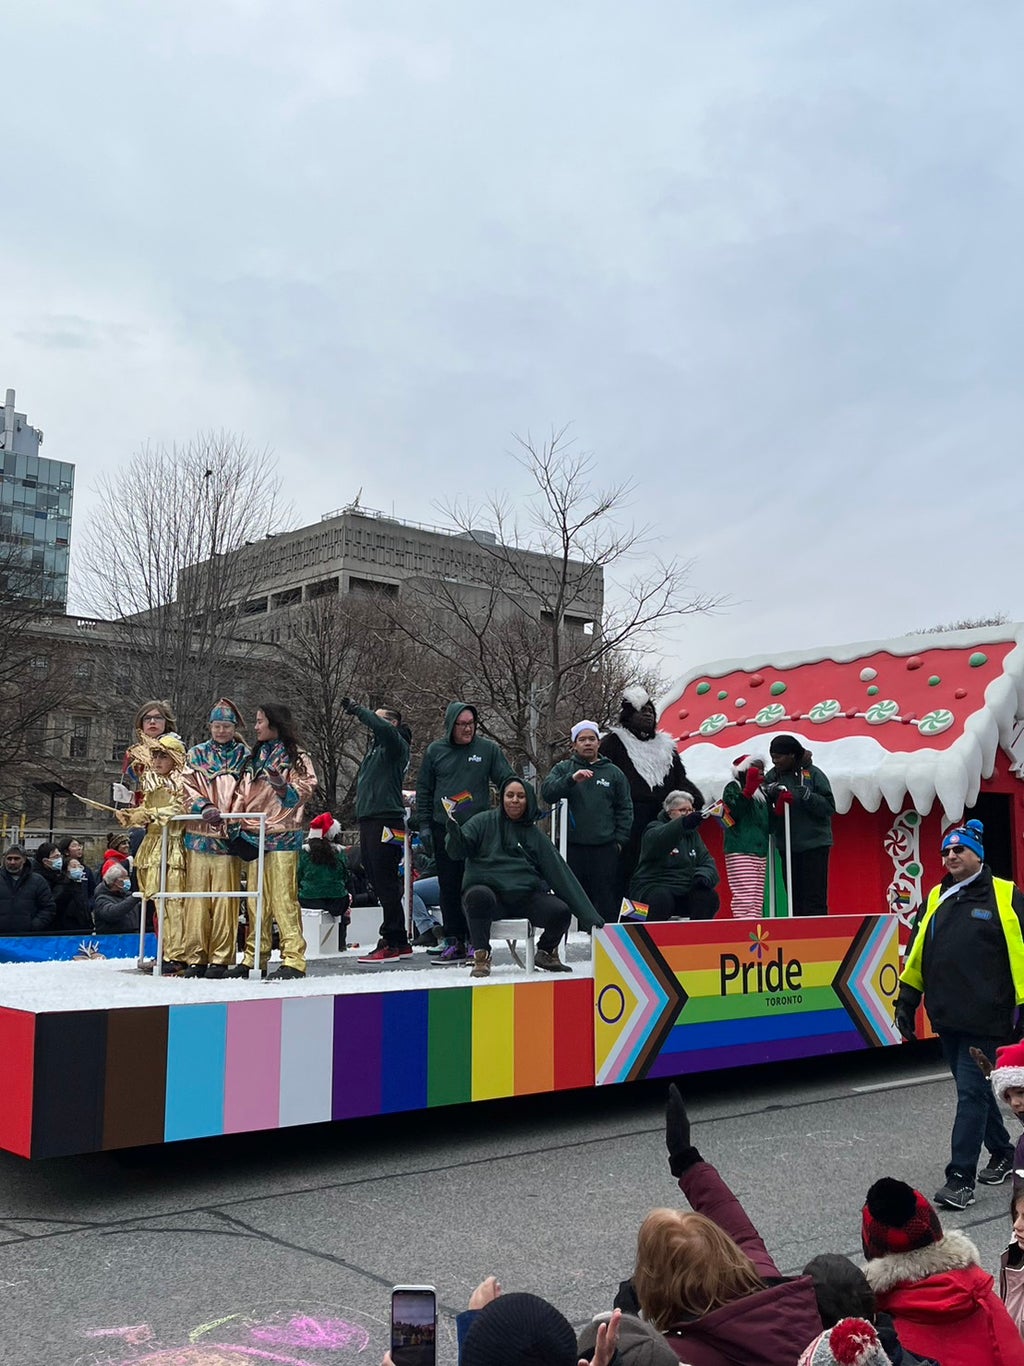 Santa Claus Parade on Nov 26 (Pride Toronto)